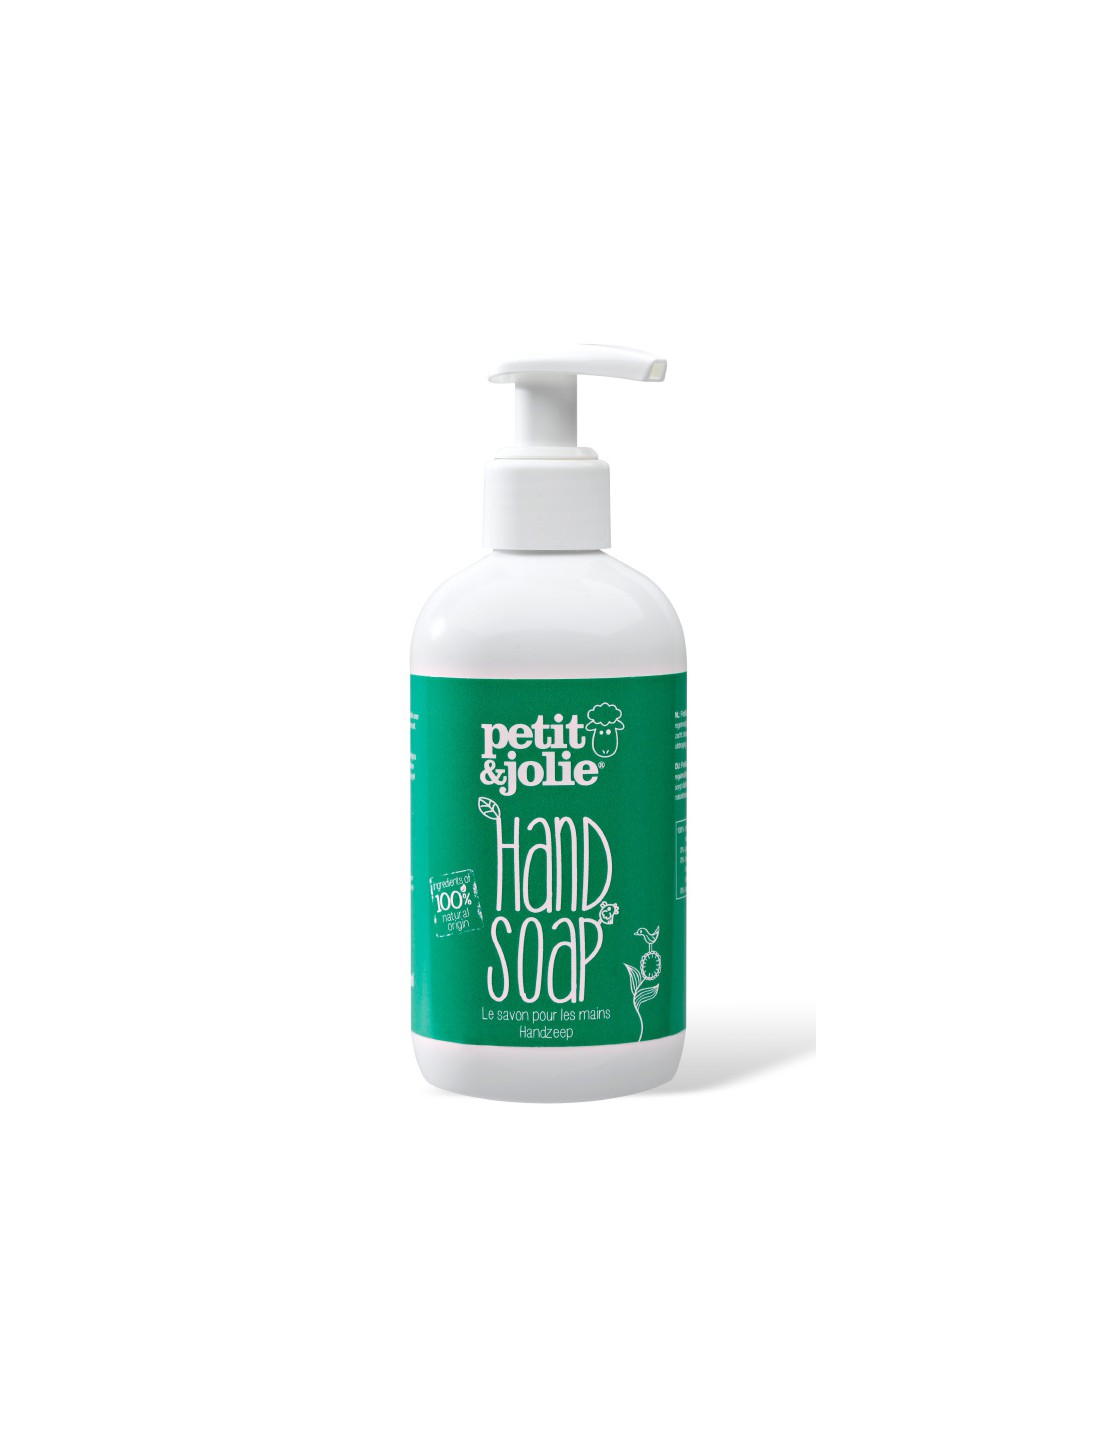 Hand Soap (Jabón de manos) 250ml. Petit & Jolie